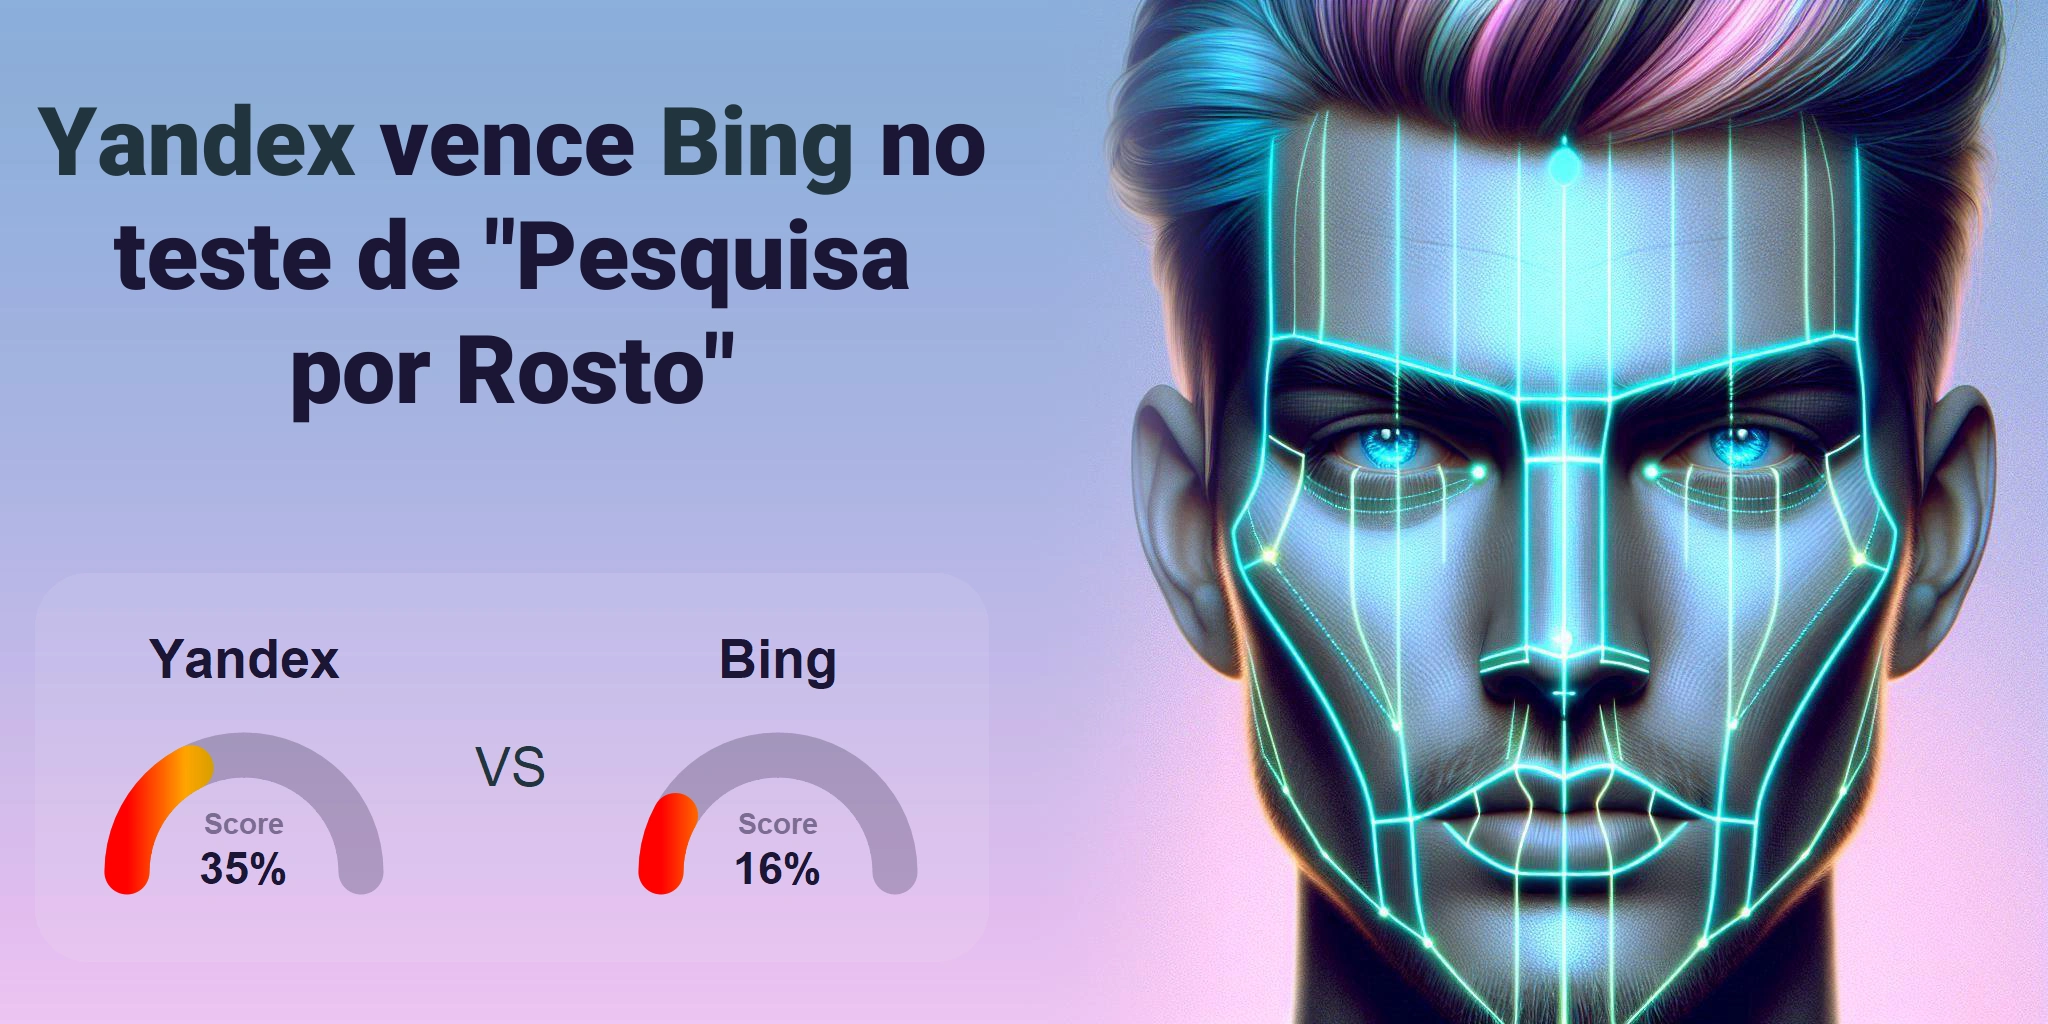 Bing.com vs Yandex.com